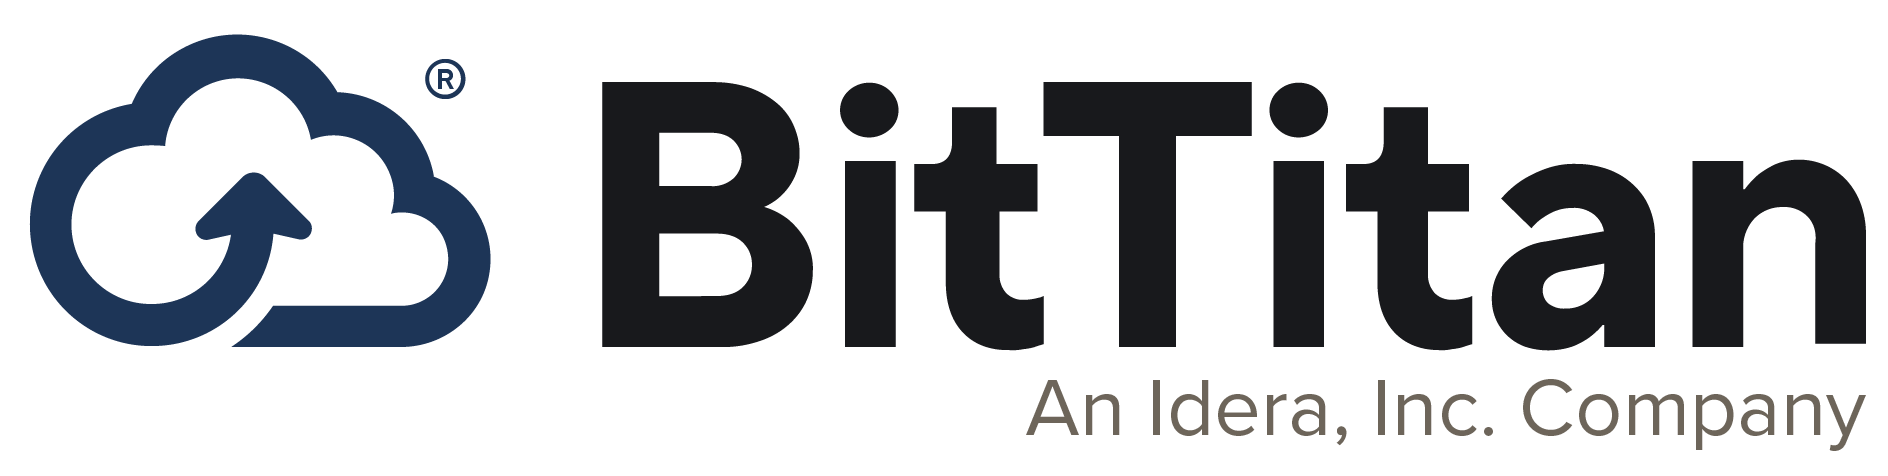 BT_IDERA Logo_Horizontal on Light.png